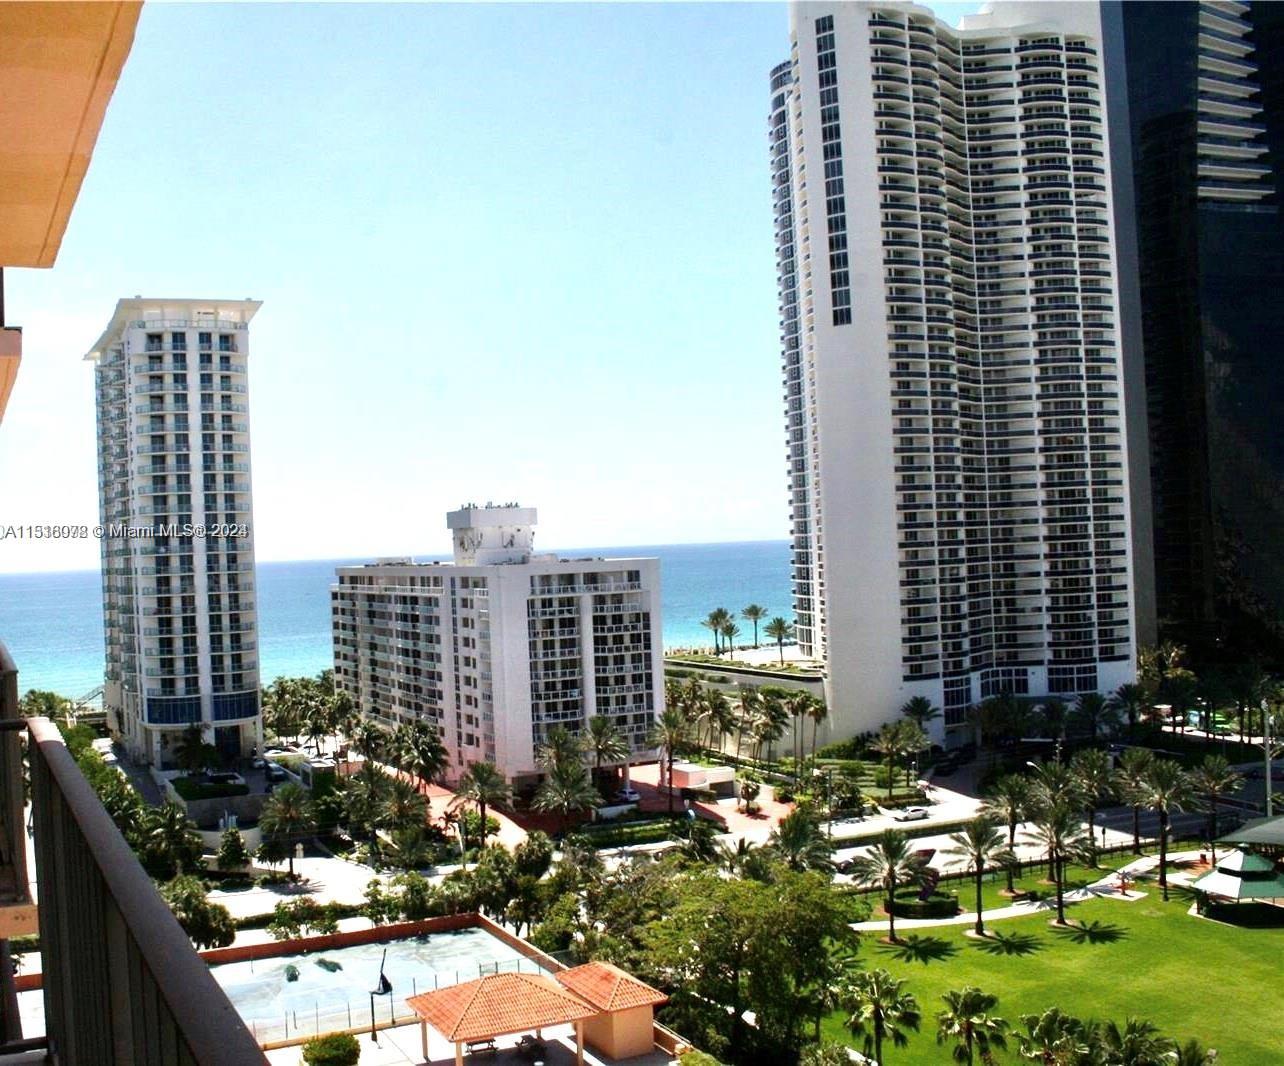 Rental Property at 210 174th St 1506, Sunny Isles Beach, Miami-Dade County, Florida - Bedrooms: 2 
Bathrooms: 2  - $2,700 MO.